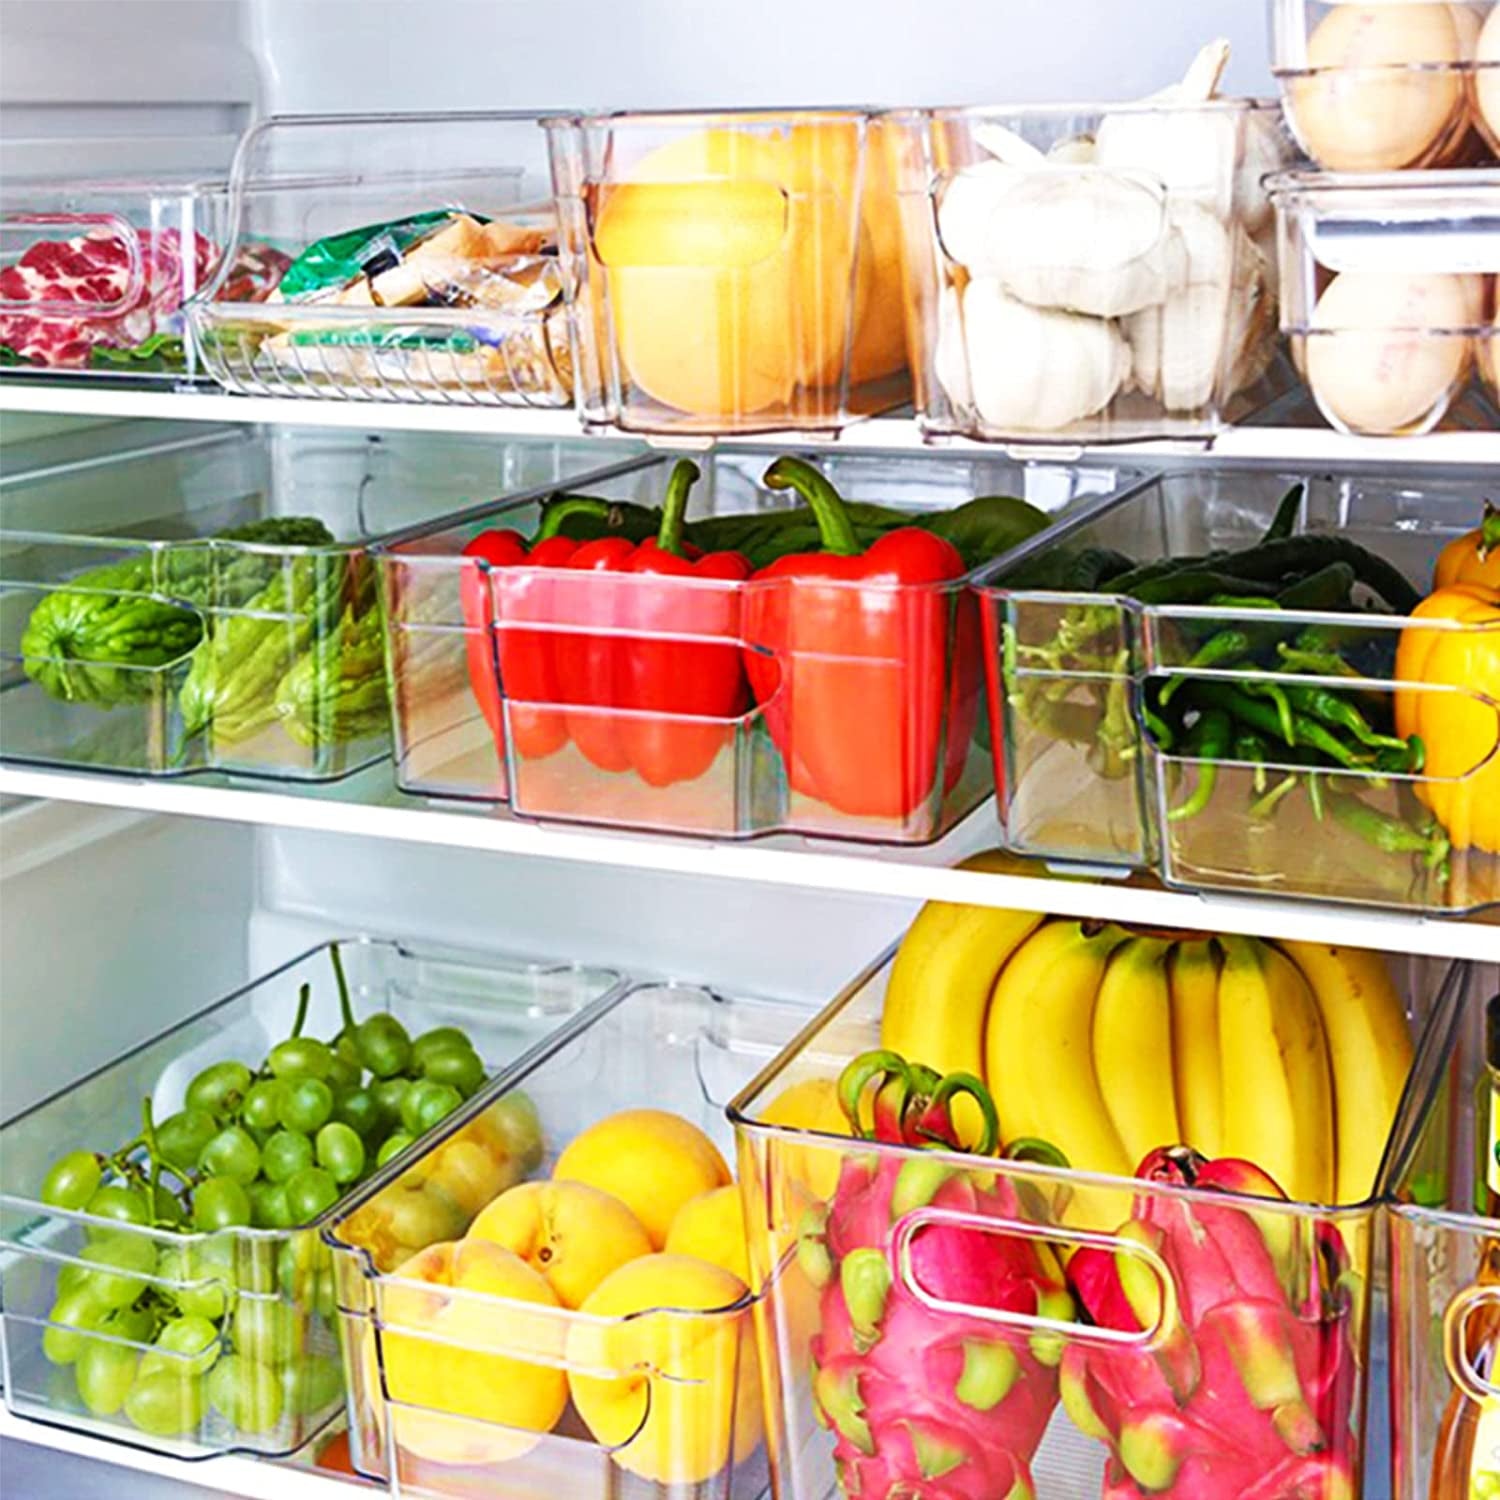 Plastic Food Storage Bins with Handles, Suit for Kitchen Countertops ,Refrigerator ,Cabinet and Freezer ,Organizer for Fruit, Yogurt, Snacks, Pasta - BPA Free,Clear Plastic Pantry Storage Racks